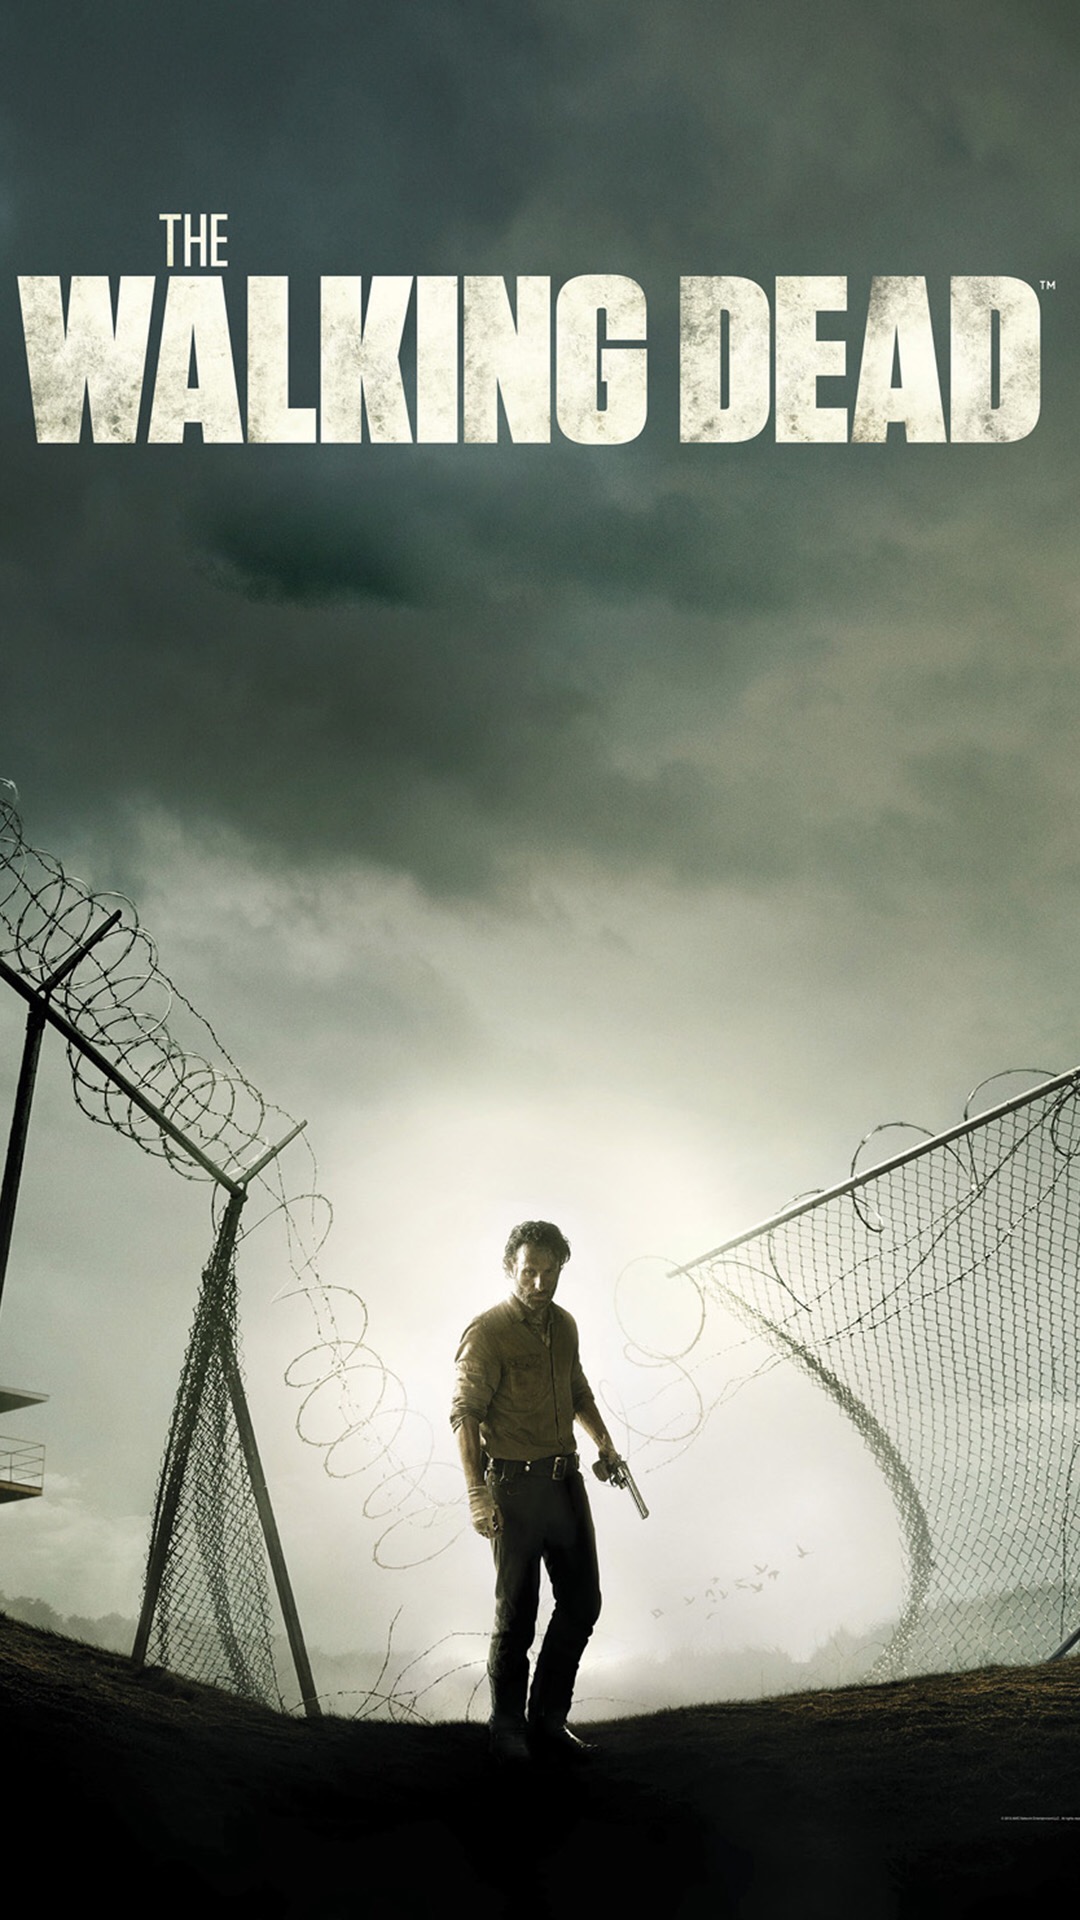 Wallpapers of the week: The Walking Dead